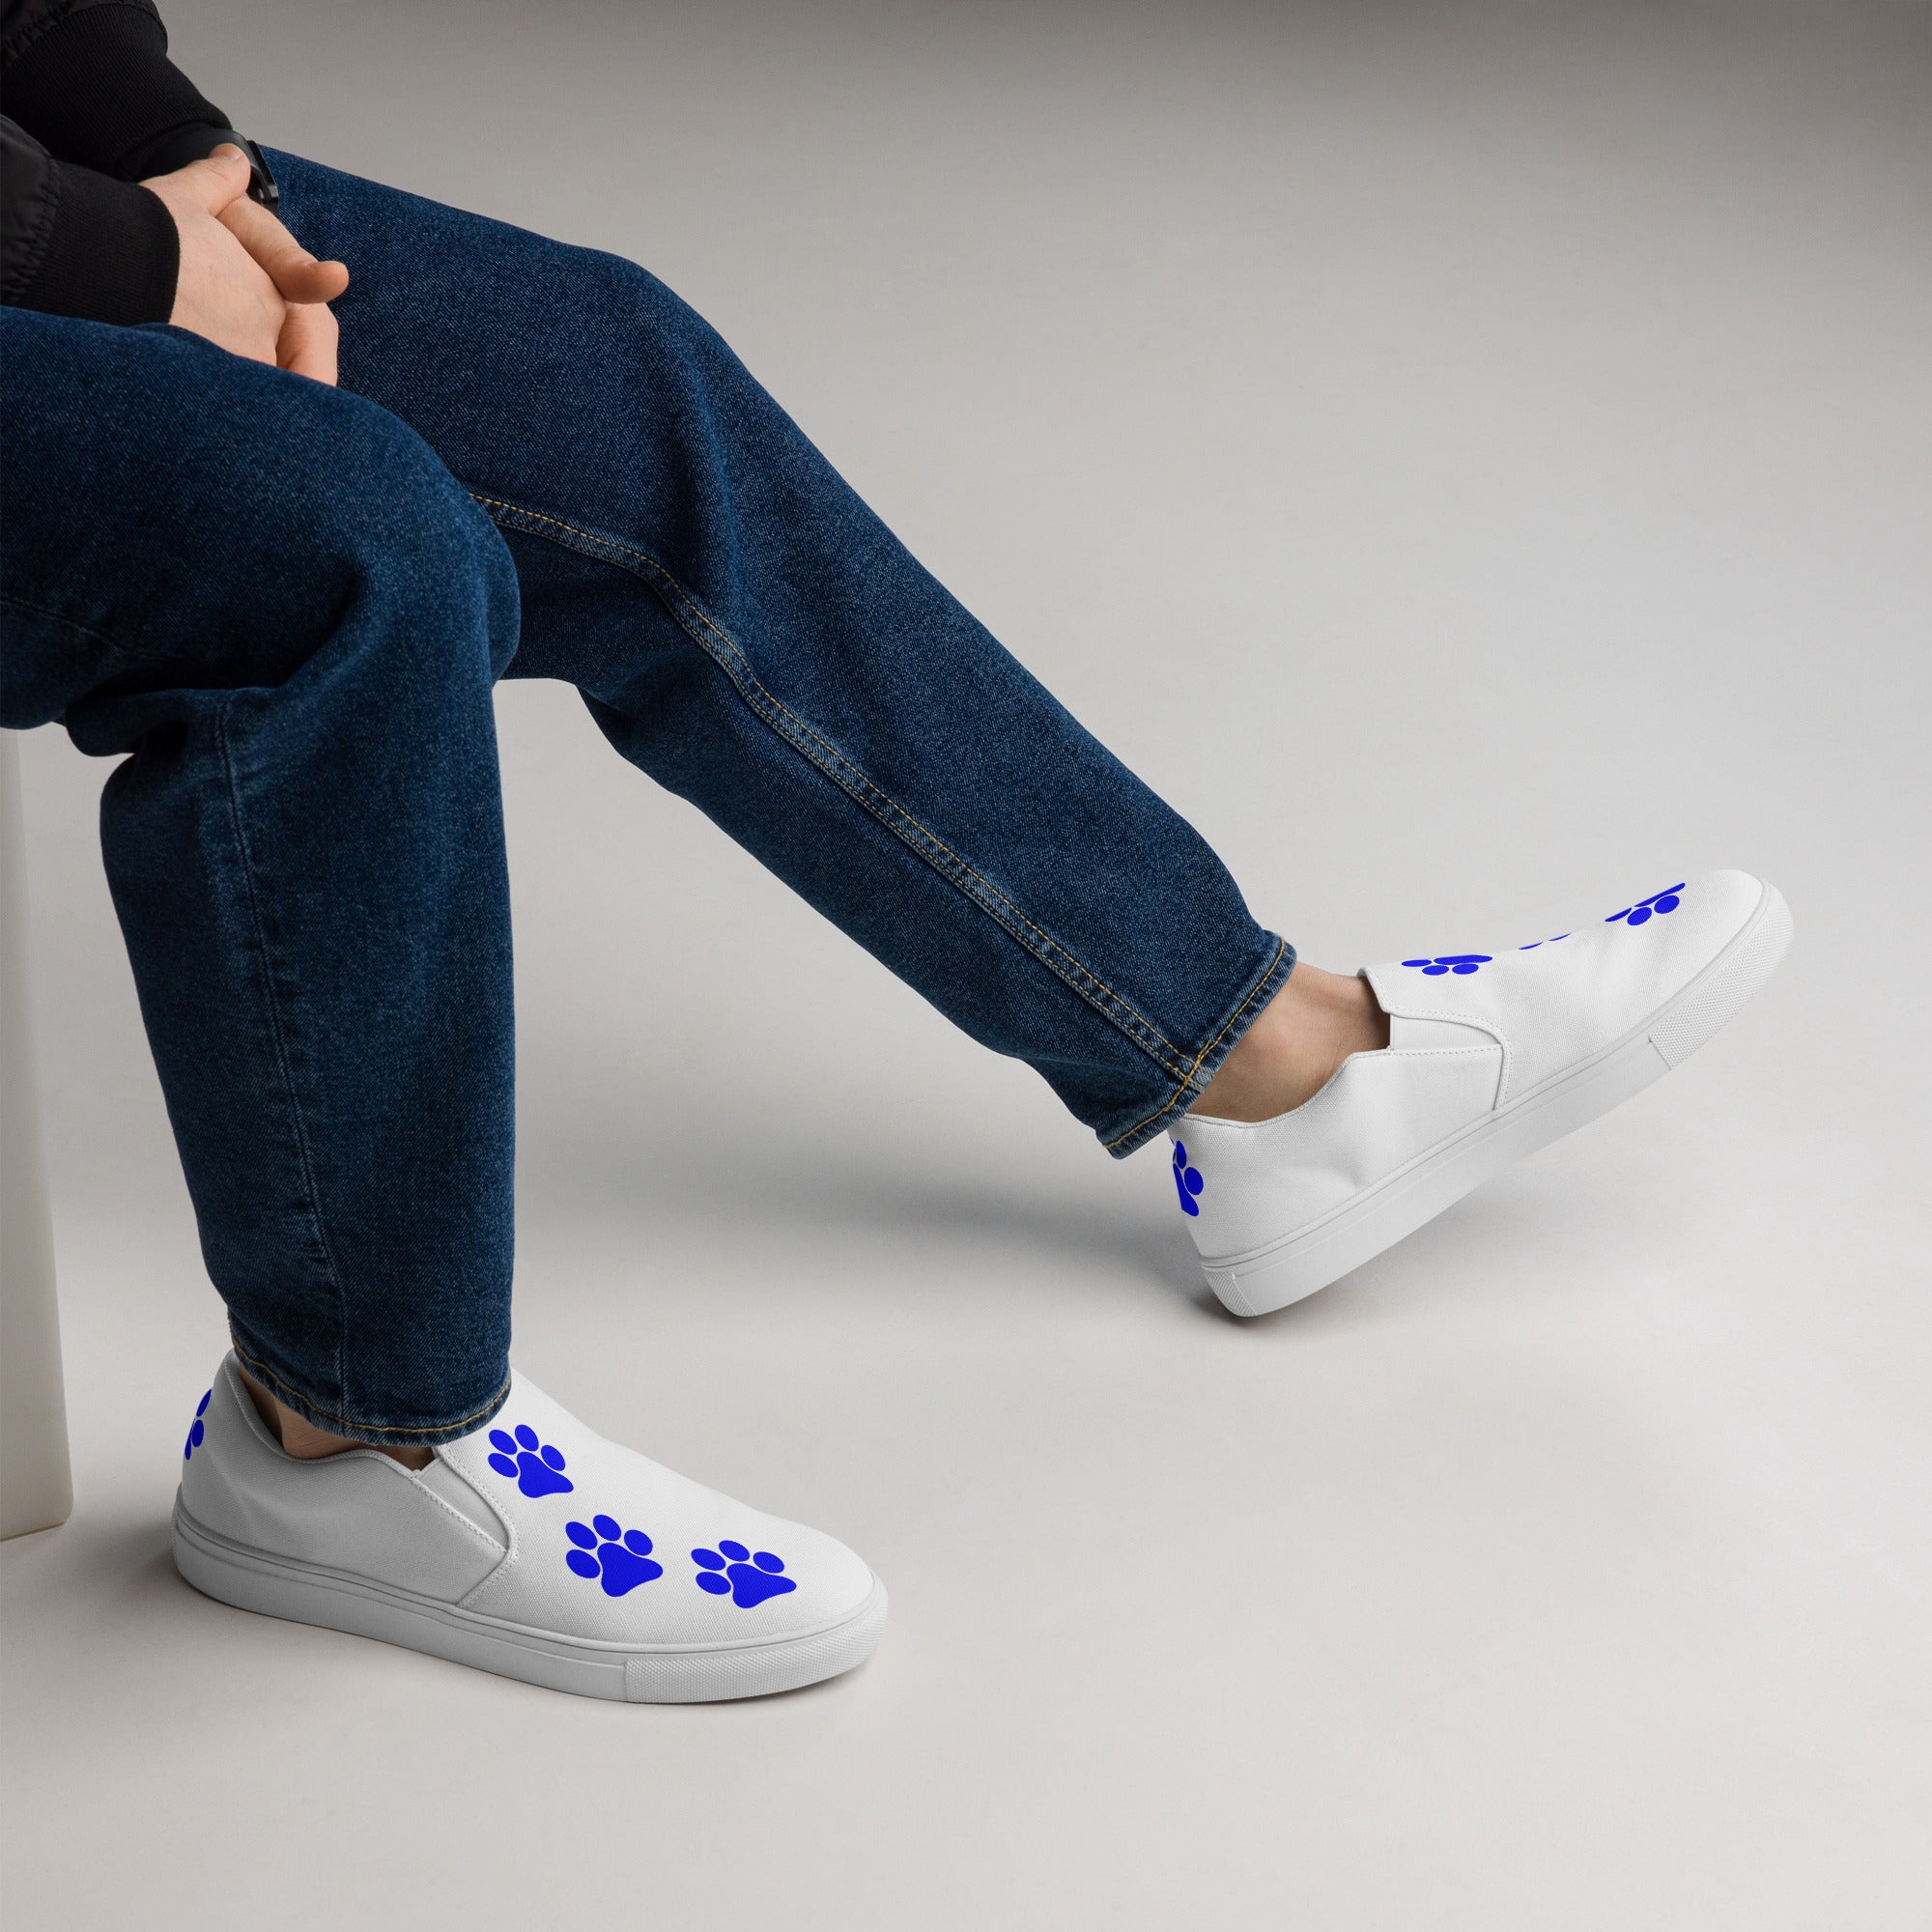 Men’s slip-on Blue Paw shoes